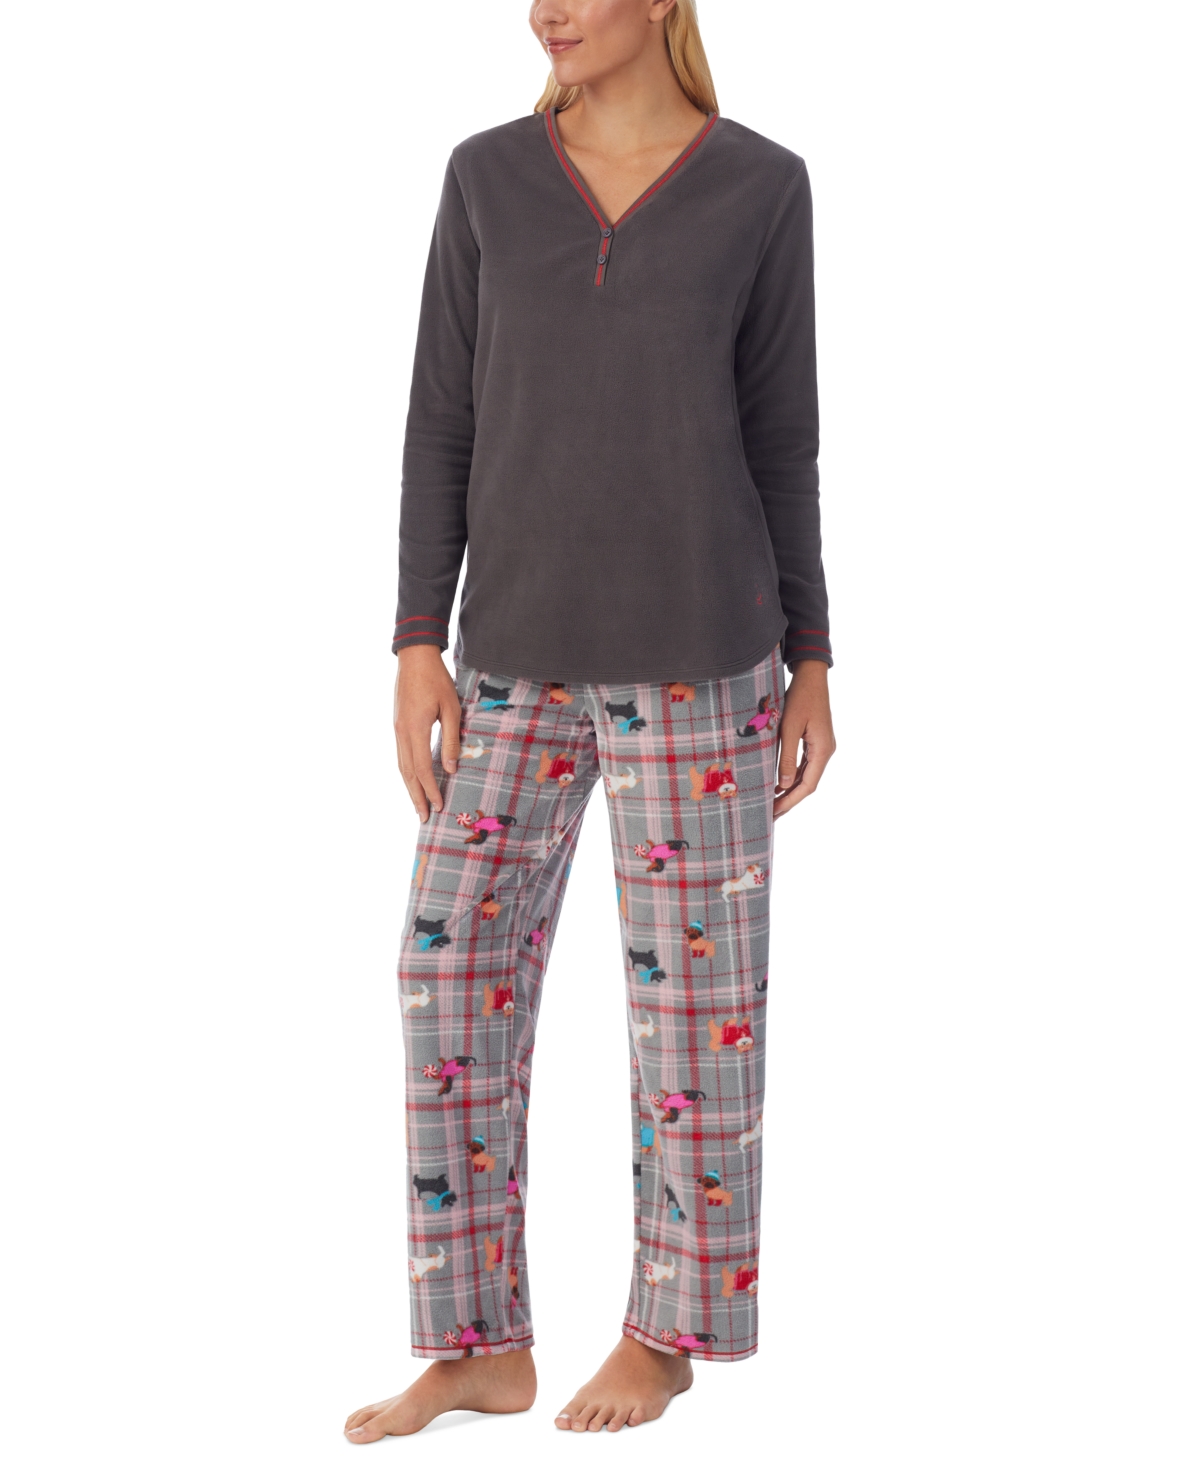 Henley Top & Print Pants Pajama Set - Grey Plaid